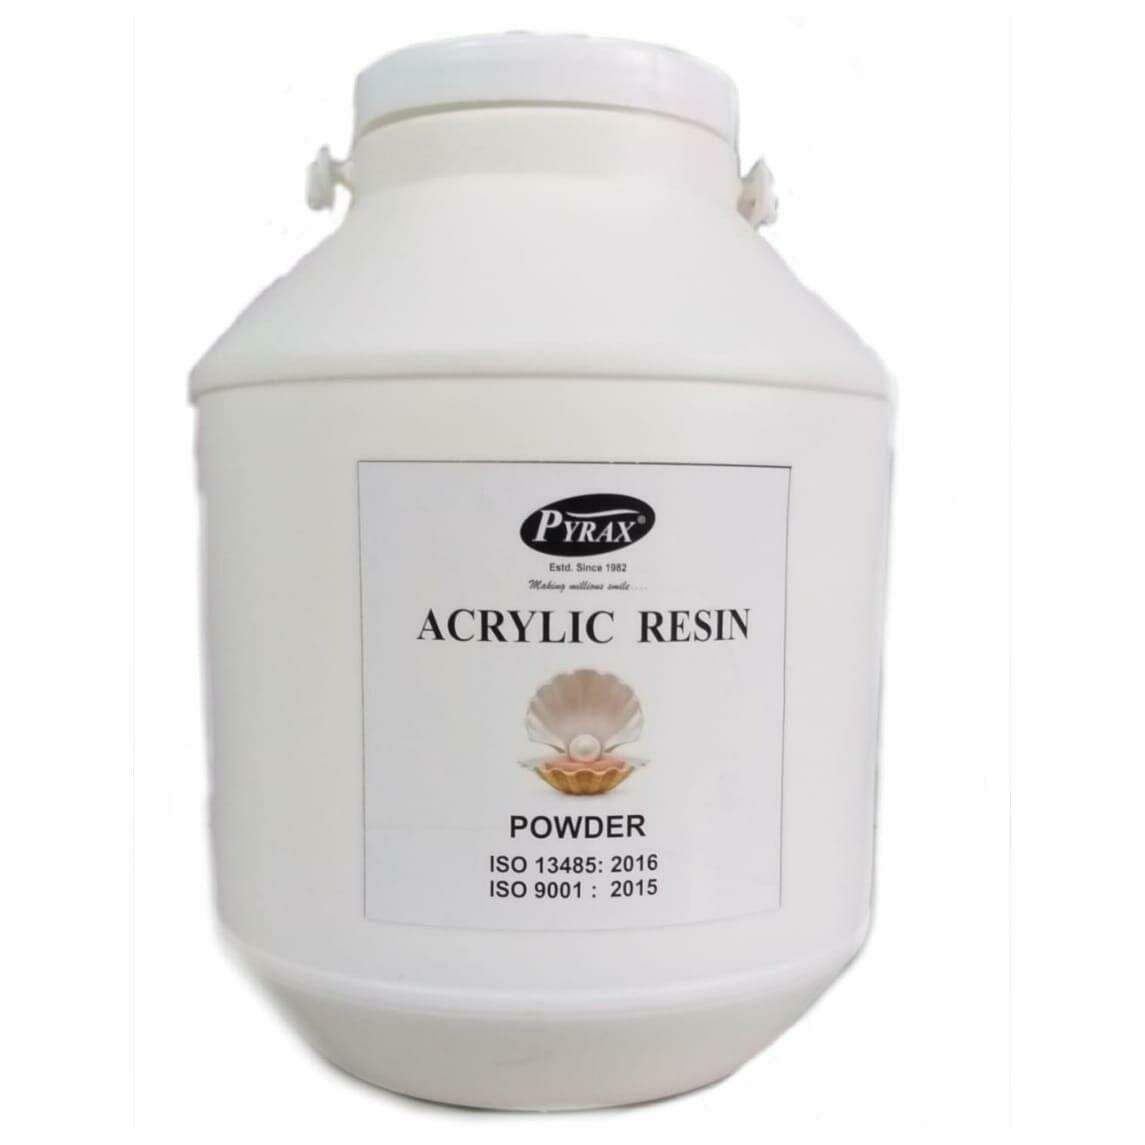 ACRYLIC RESIN (POWDER - WHITE) FOR PEARL (MOTI) FARMING - 3 KG